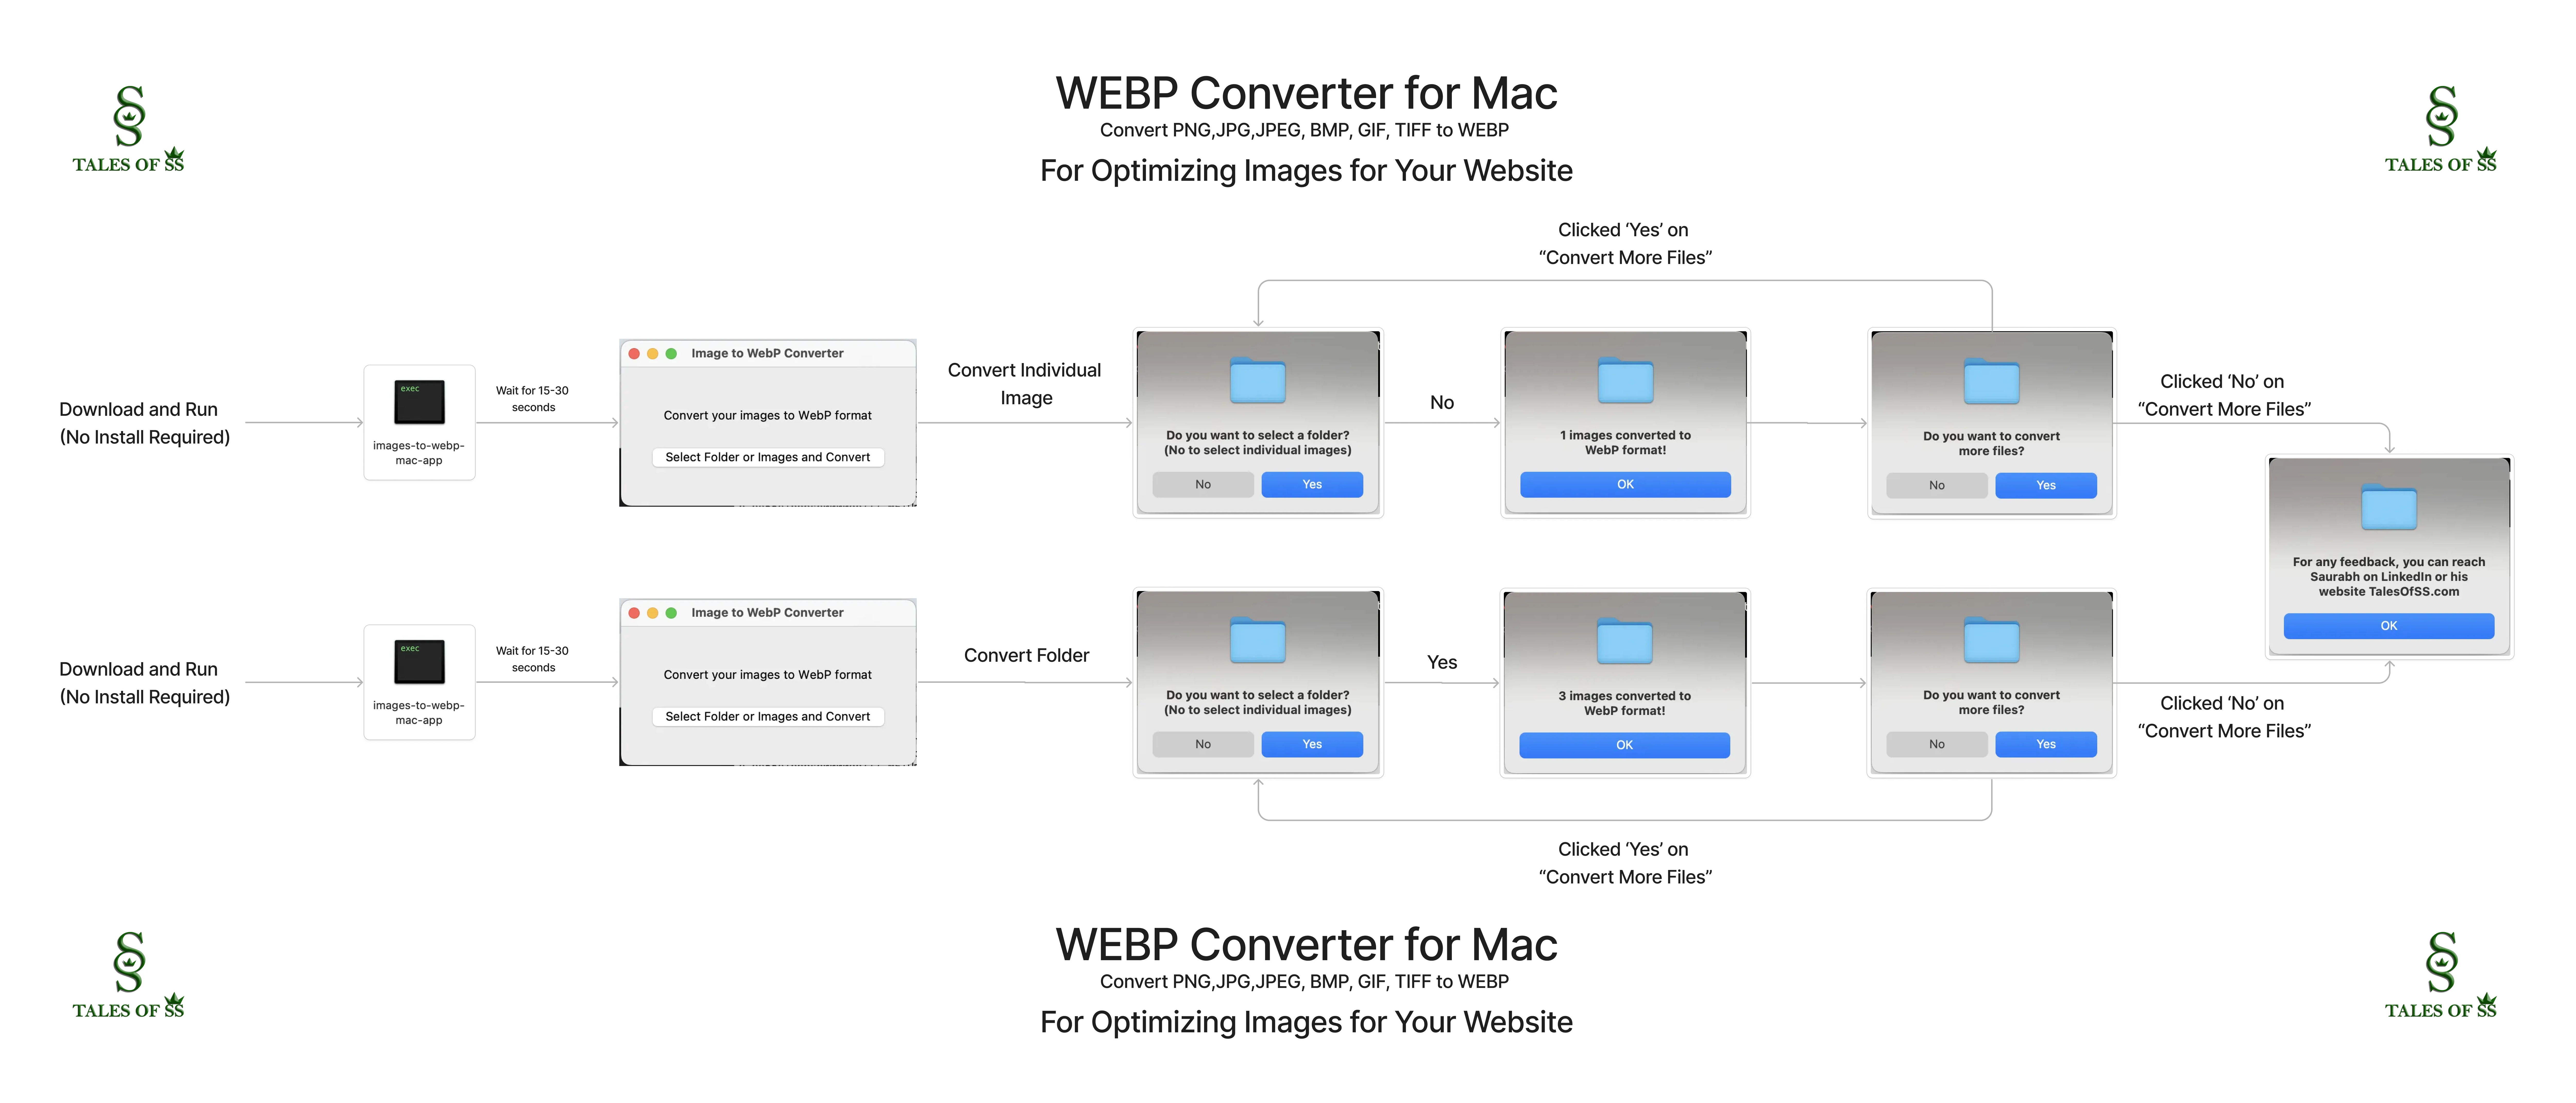 WEBP Converter for Mac